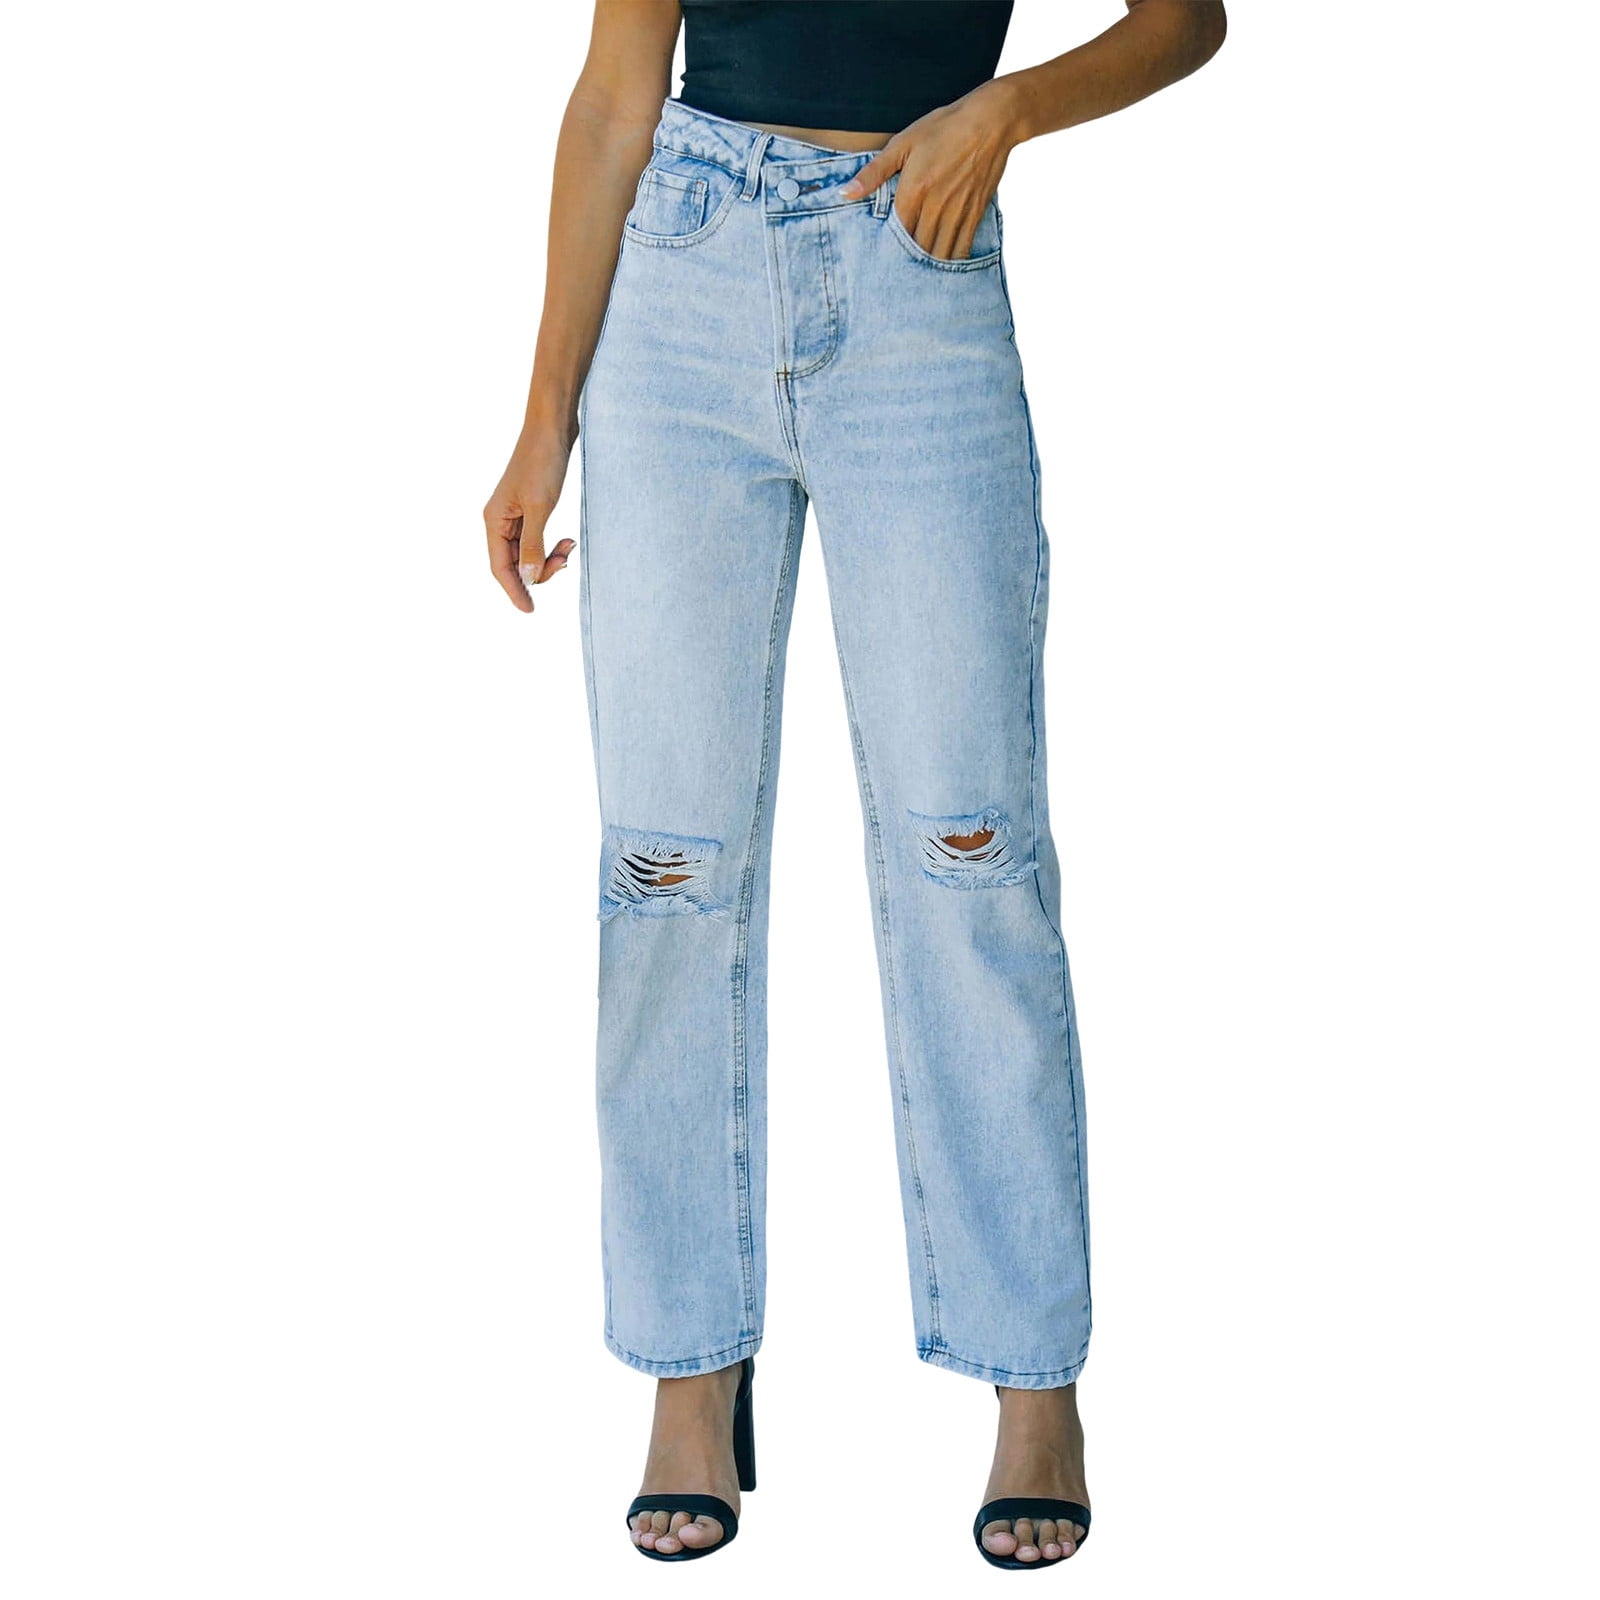 Larisalt Womens Jeans High Waisted,Women Pull-on Distressed Denim Joggers  Elastic Waist Stretch Pants Light Blue,XL